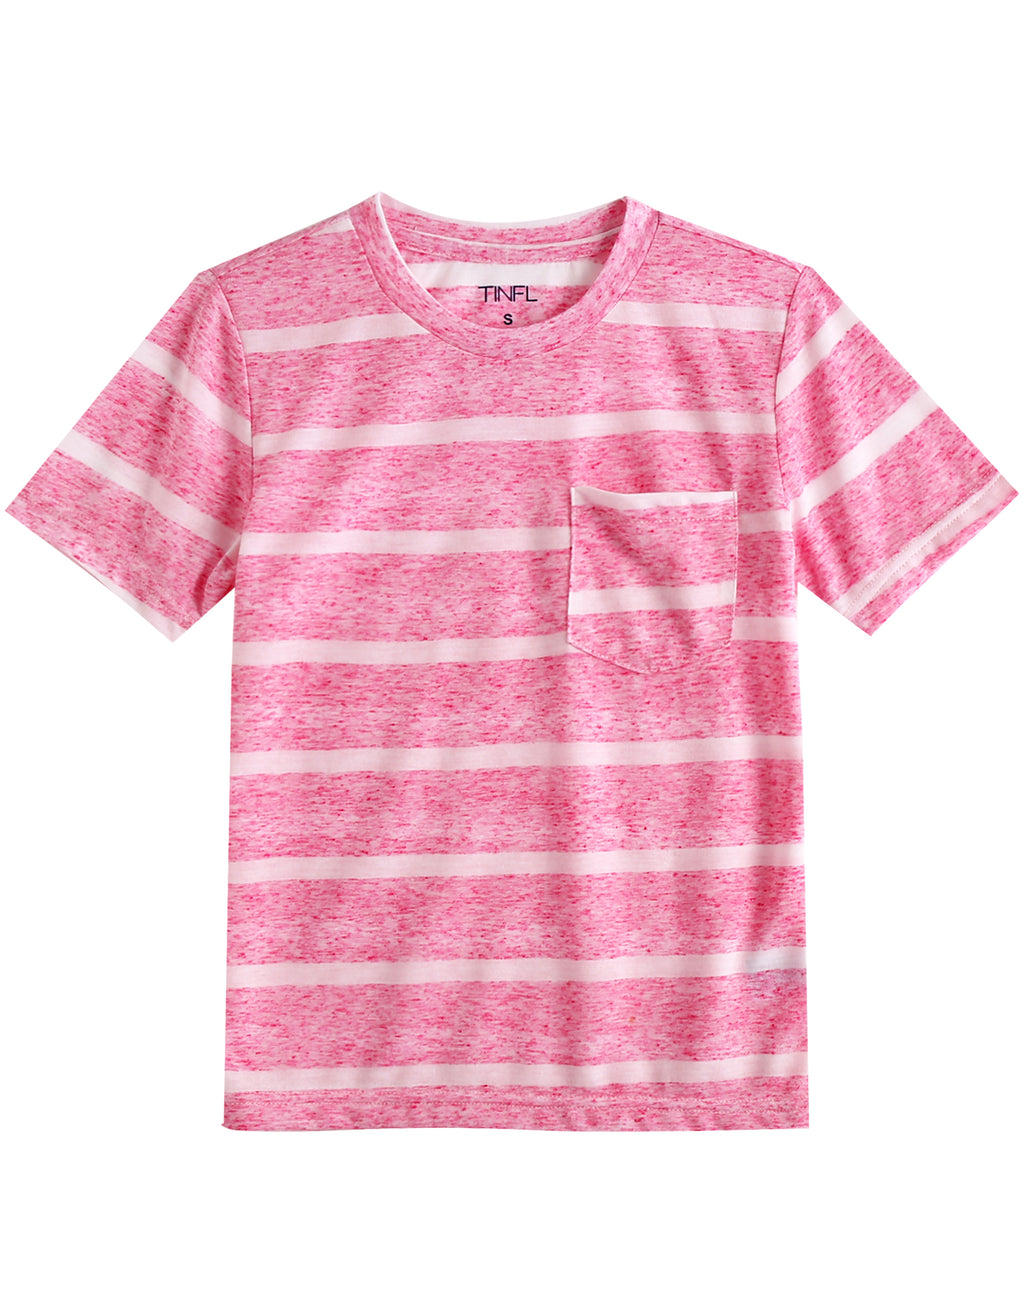 Pink Short Sleeve Round Neck Tshirt - Go PJ Party